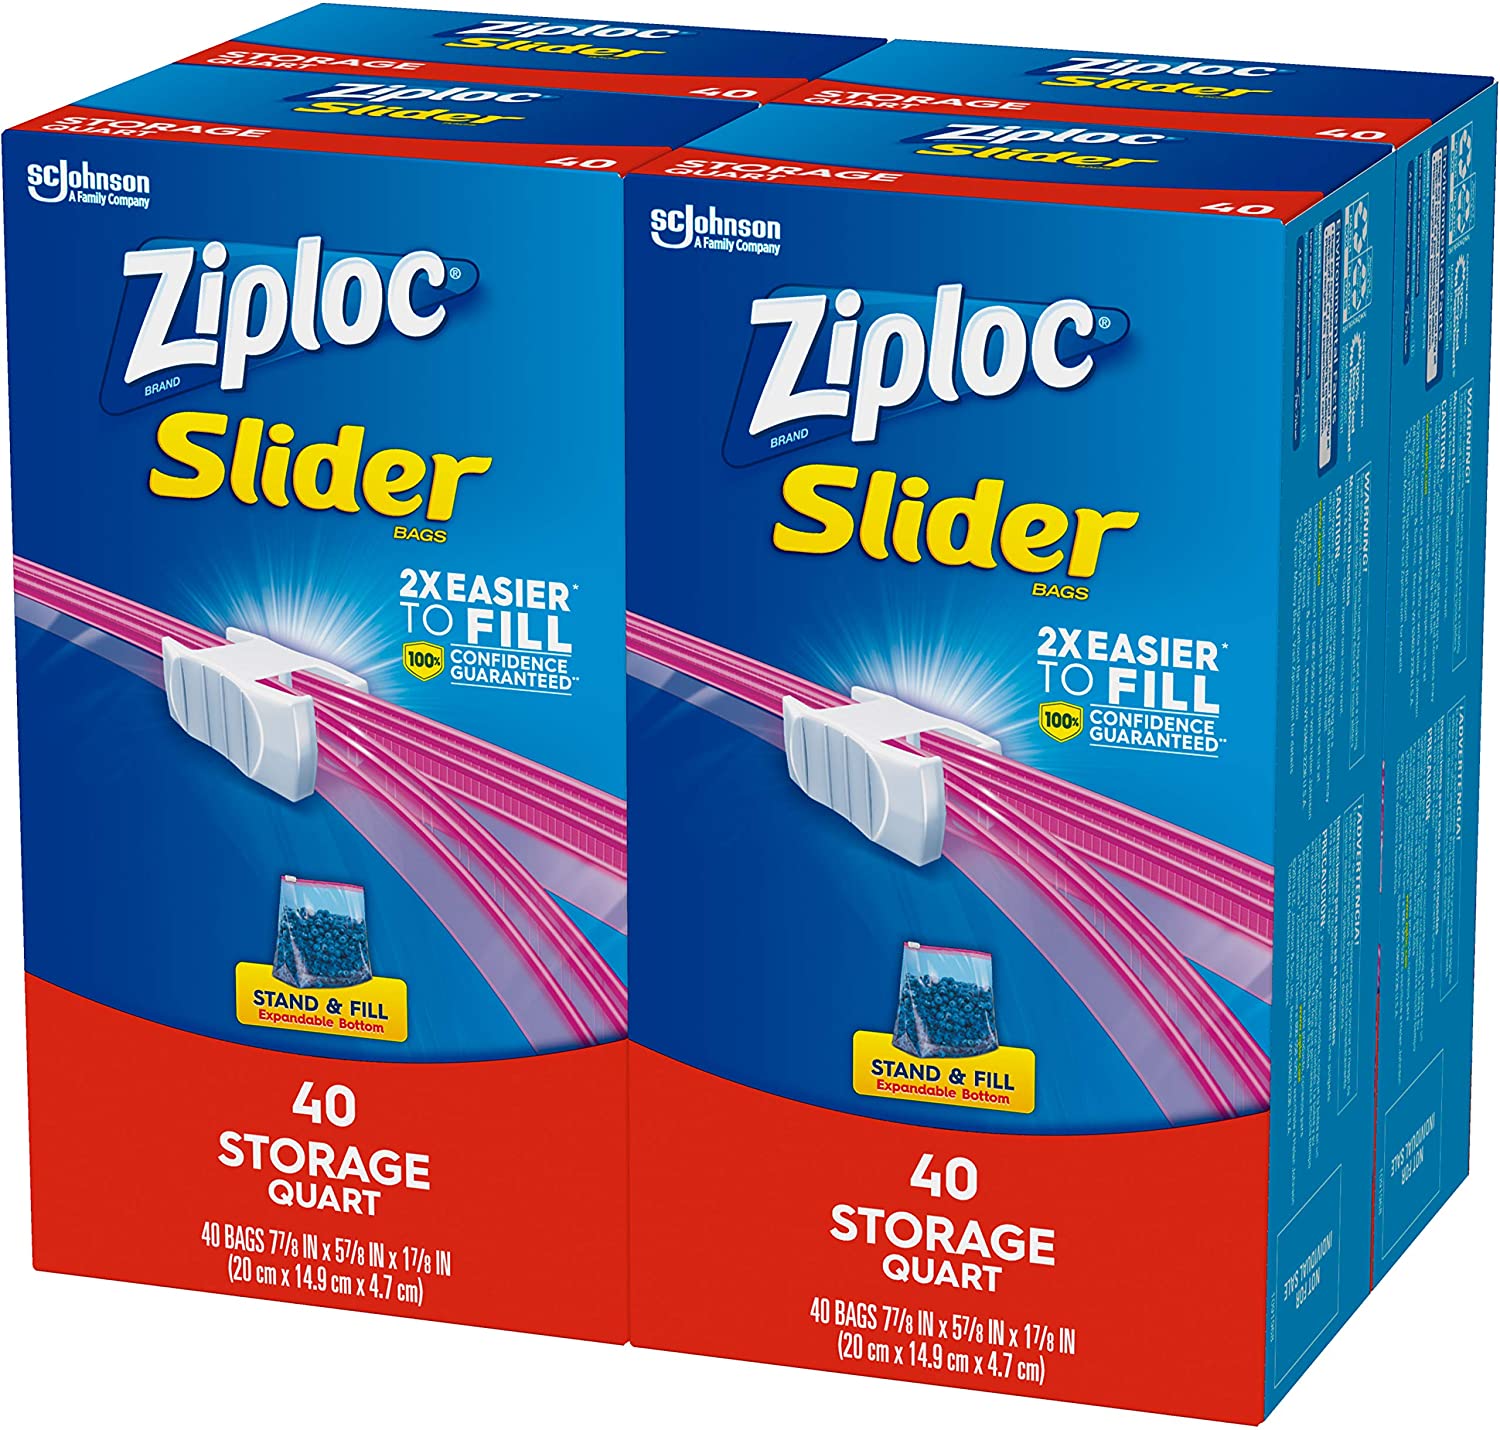 Ziploc Freezer Bags Stand & Fill Slider Quart - 15 ct box